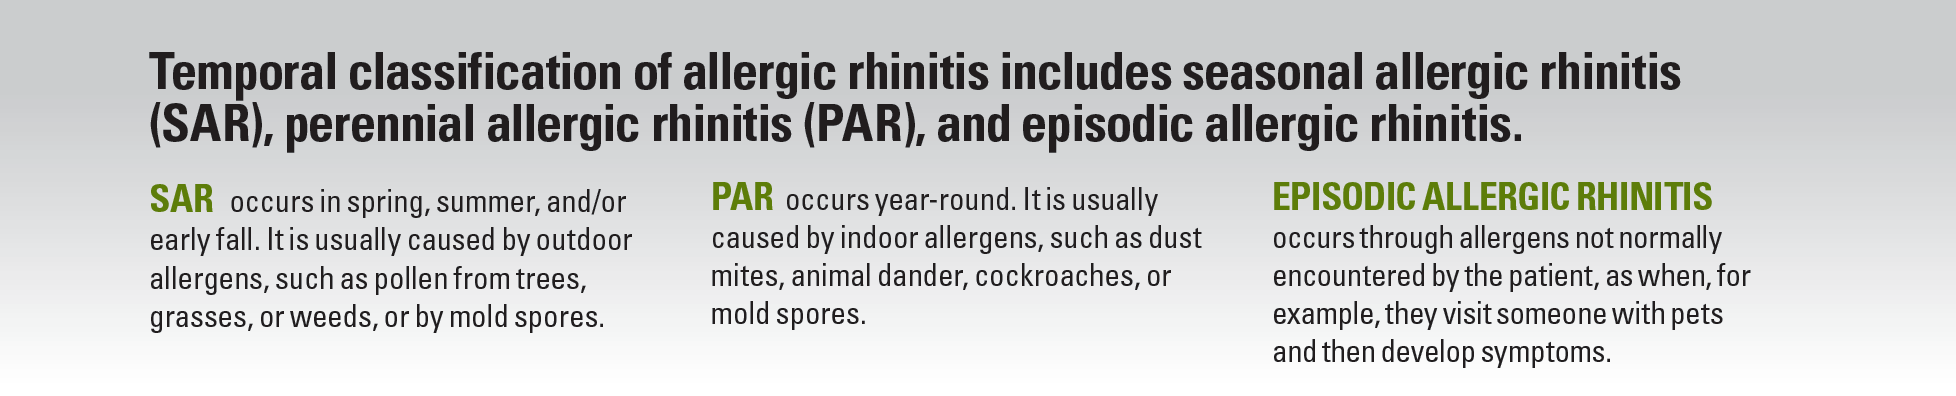 Temporal classification of allergic rhinitis